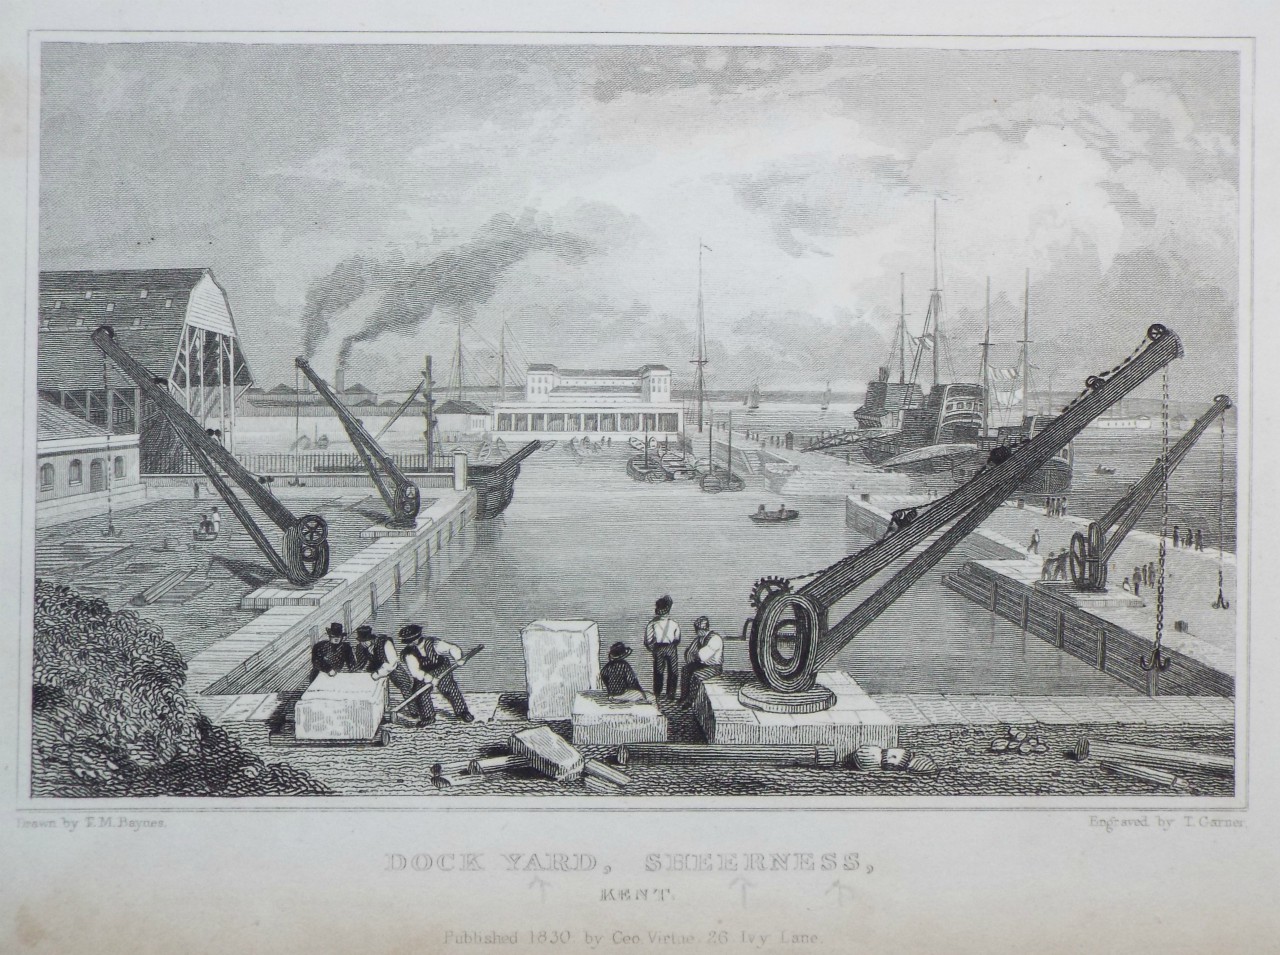 Print - Dock Yard, Sheerness, Kent. - Garner